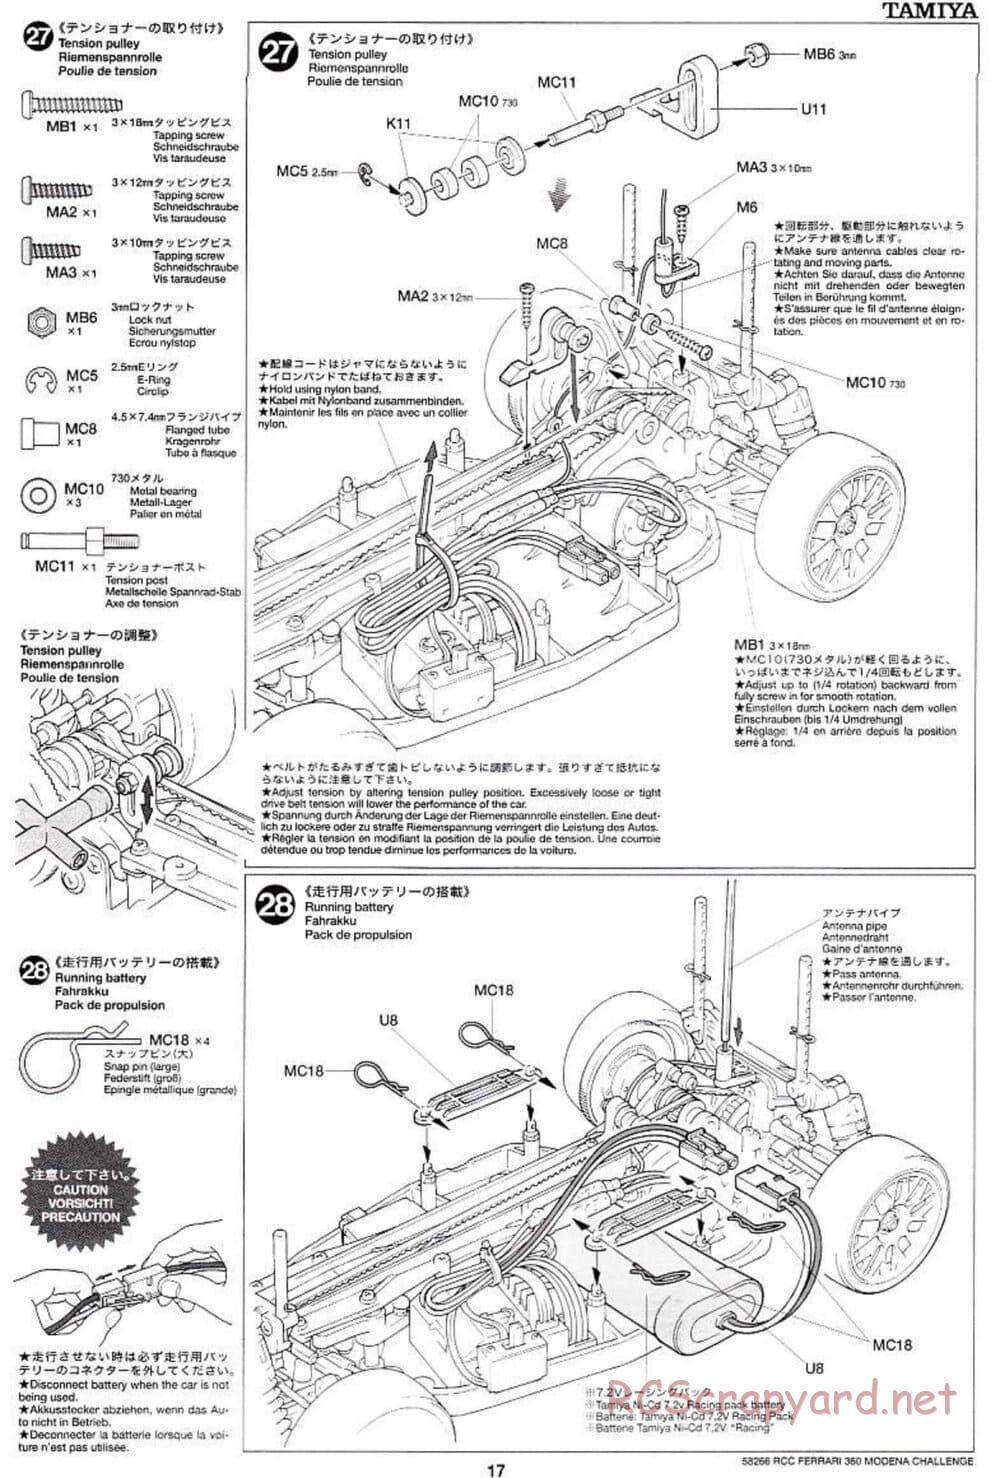 Tamiya - Ferrari 360 Modena Challenge - TA-04 Chassis - Manual - Page 17